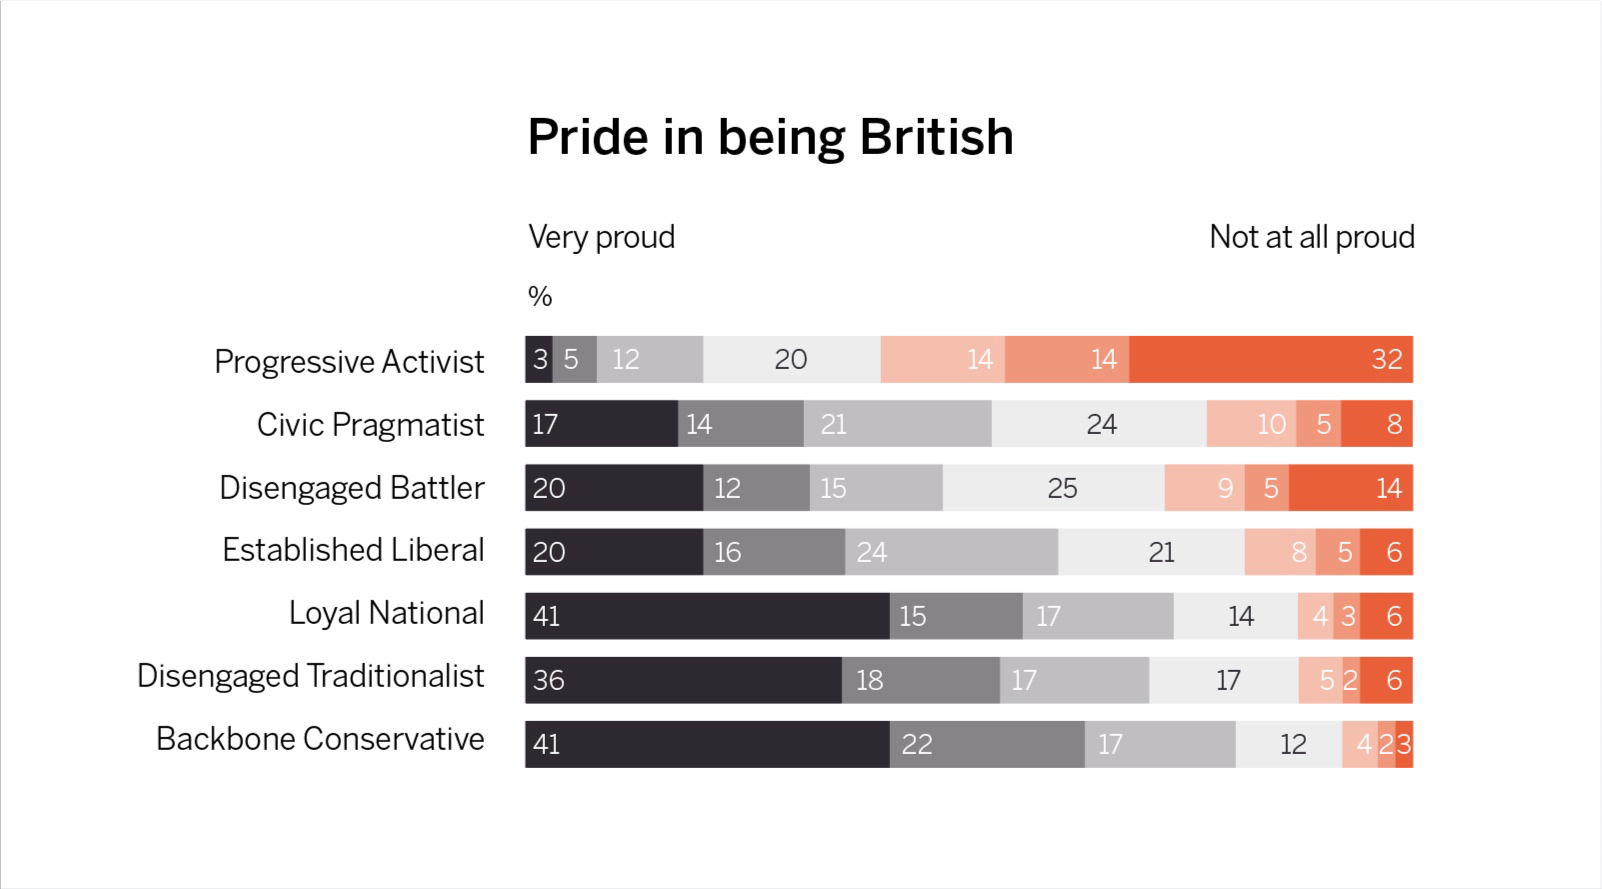 Pride in being British across segments